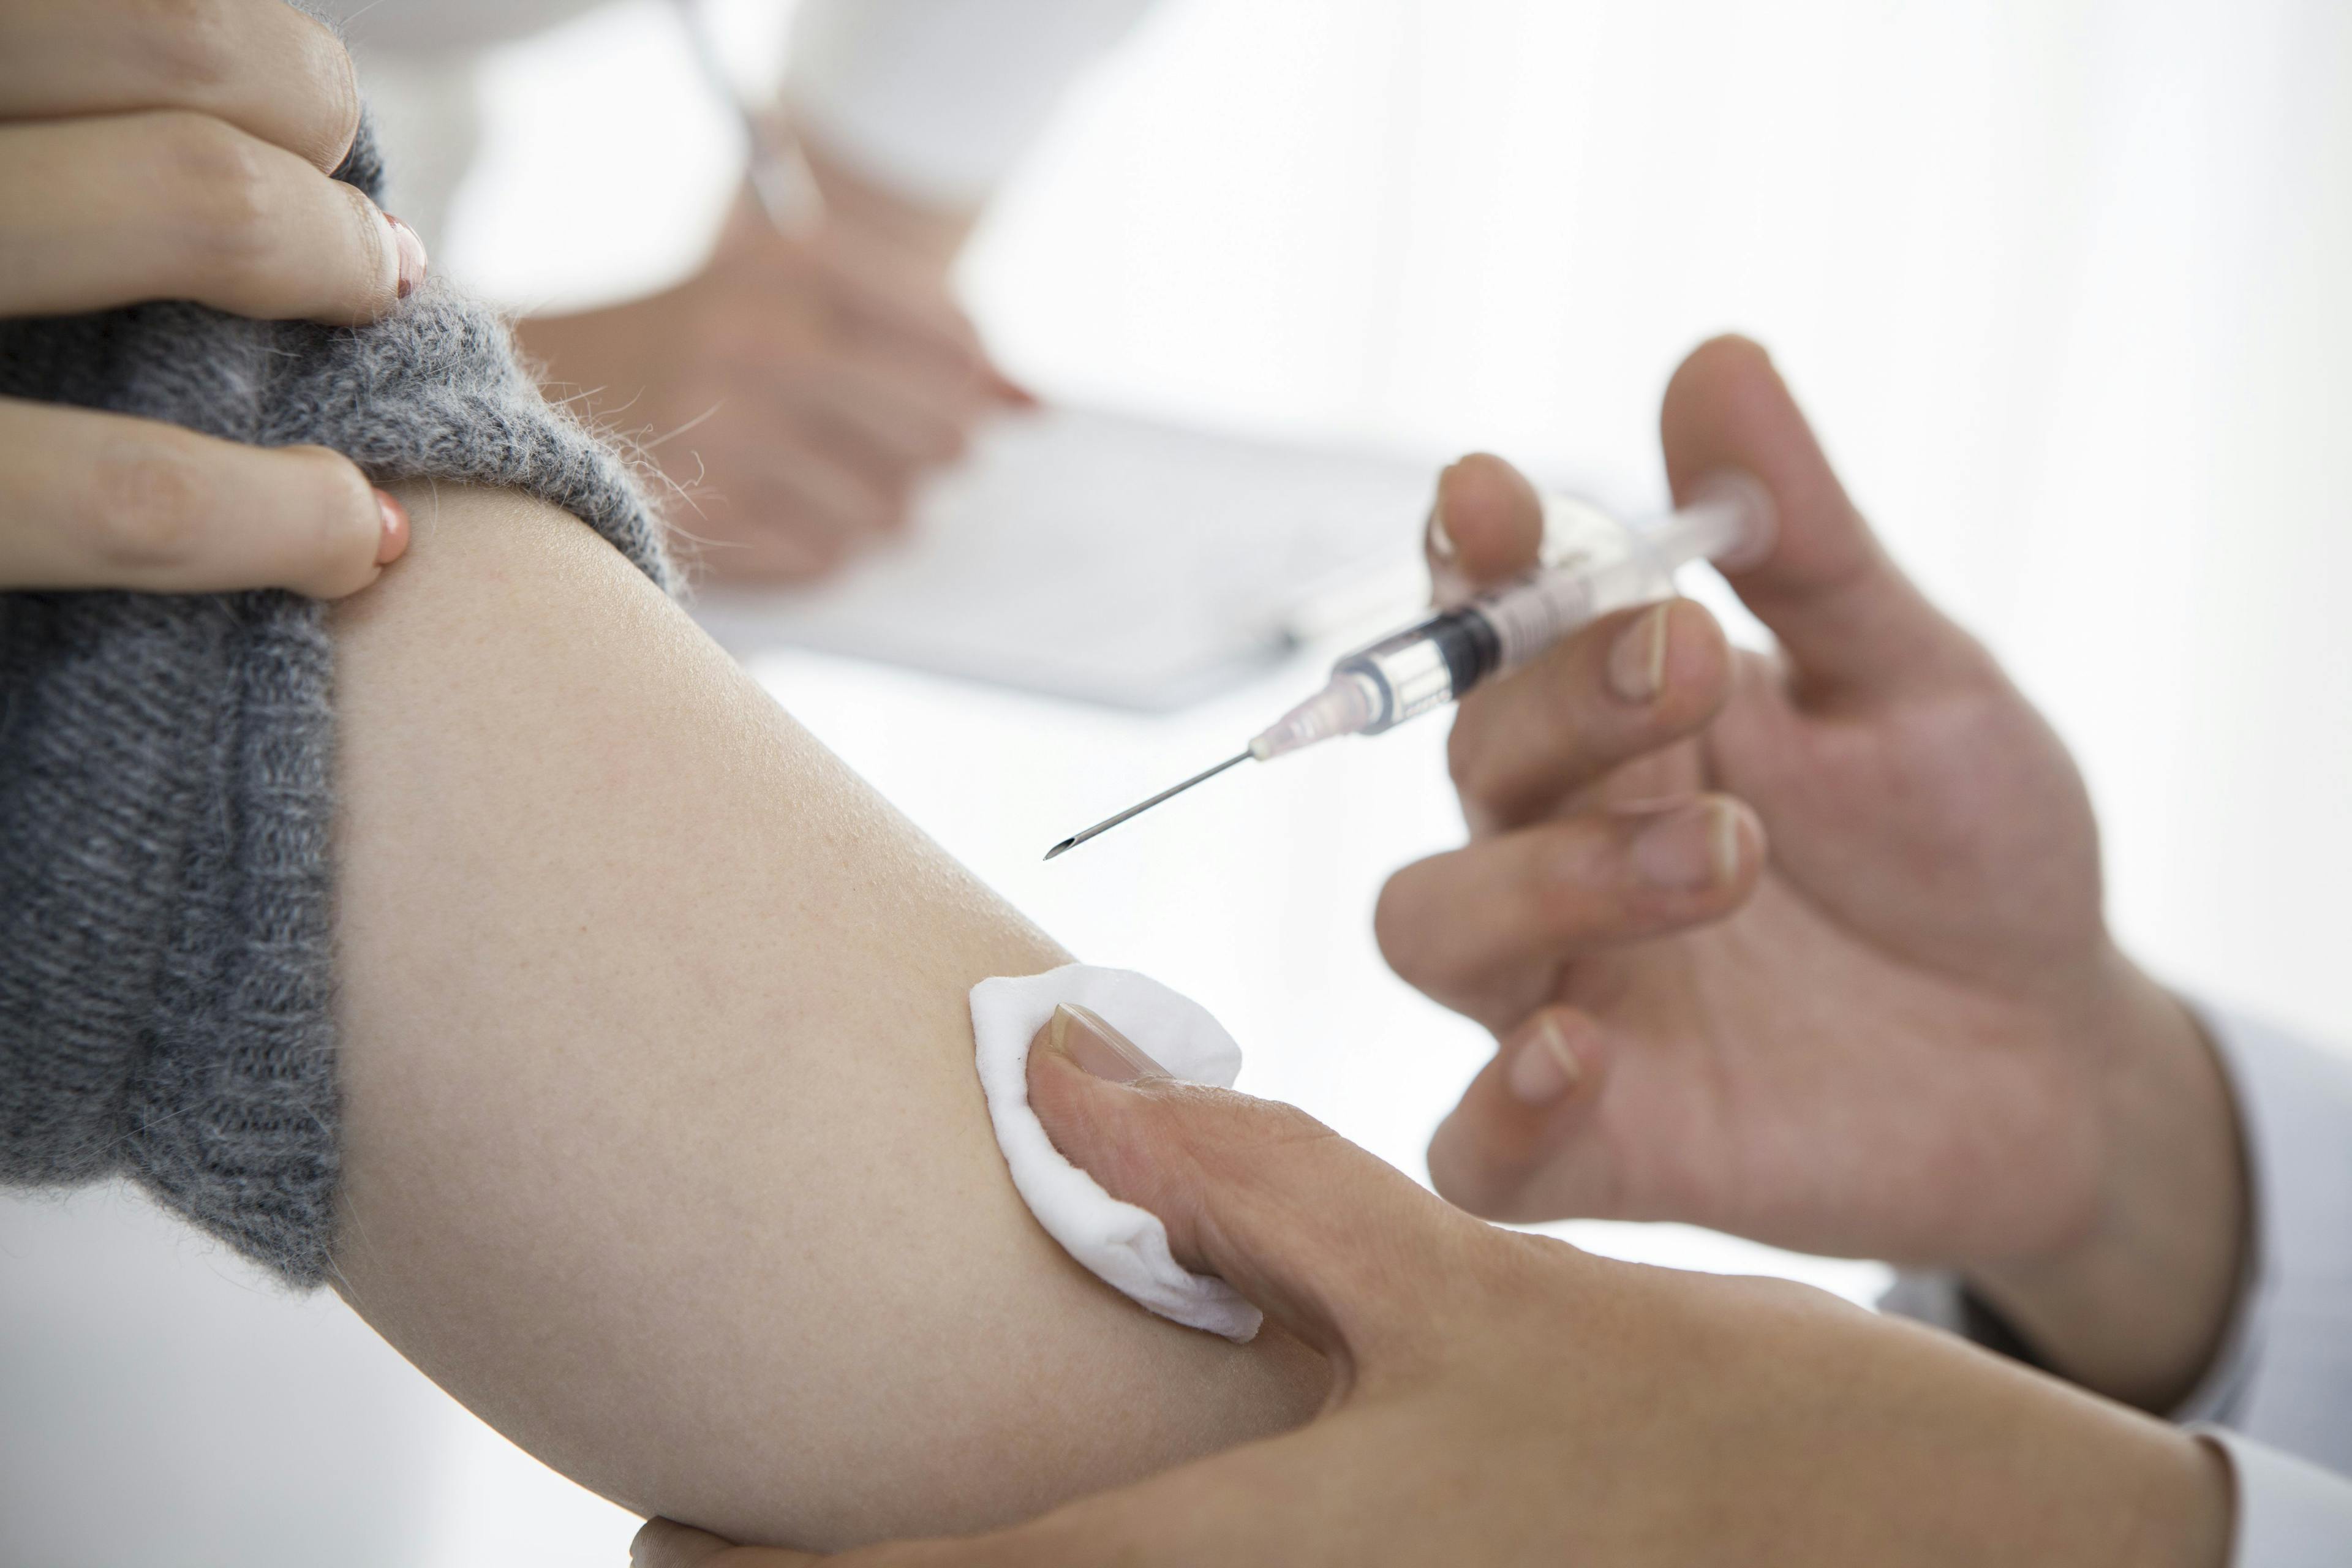 Investigational HCV Vaccine Found Safe but Not Effective